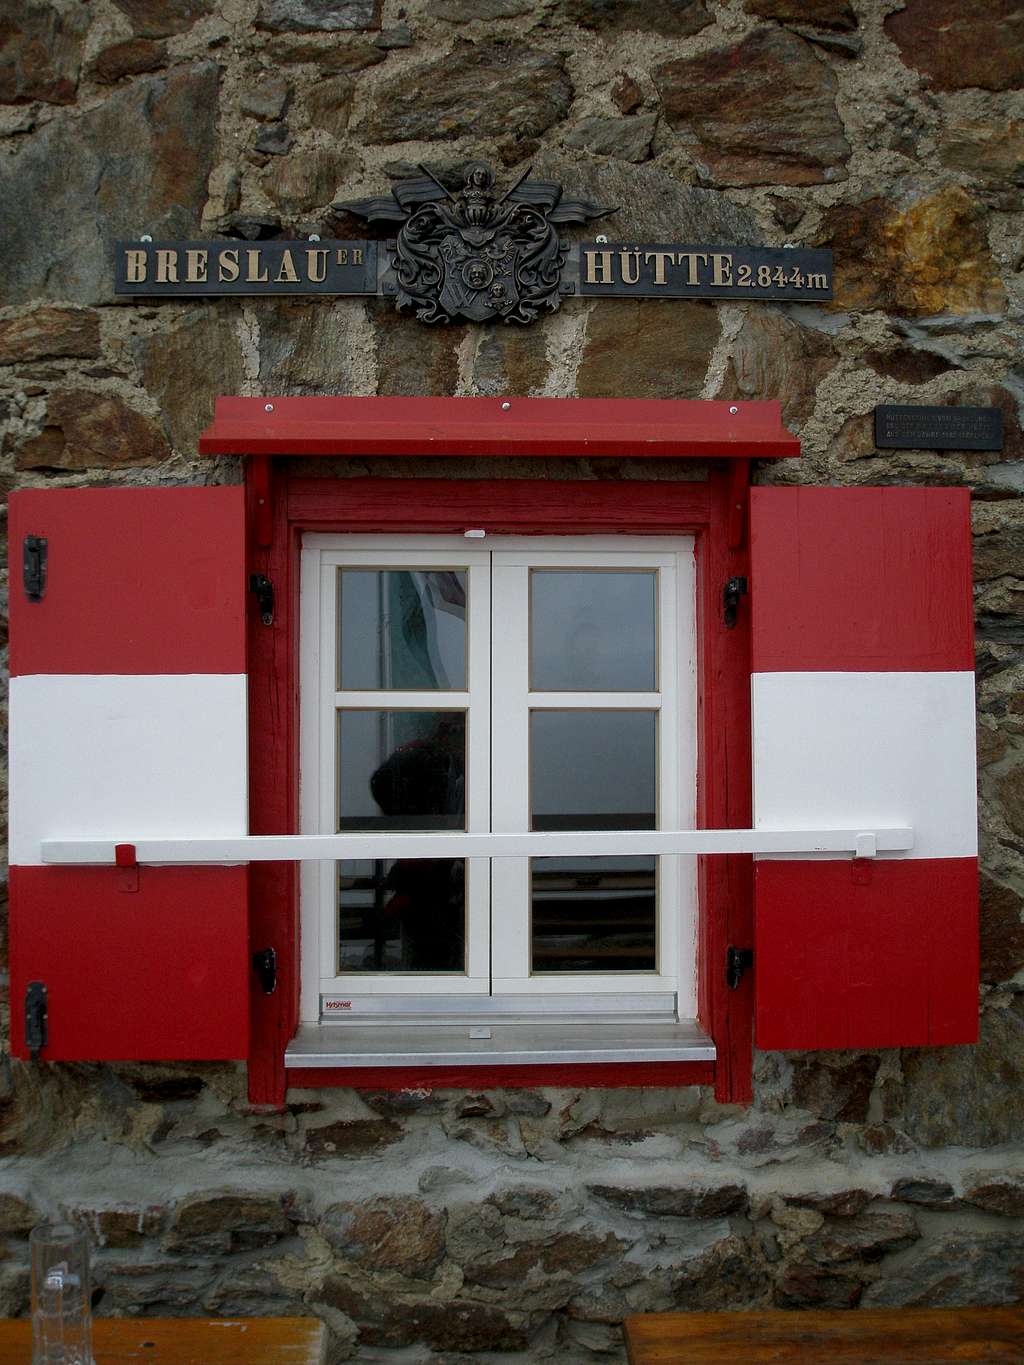 A window of the hut